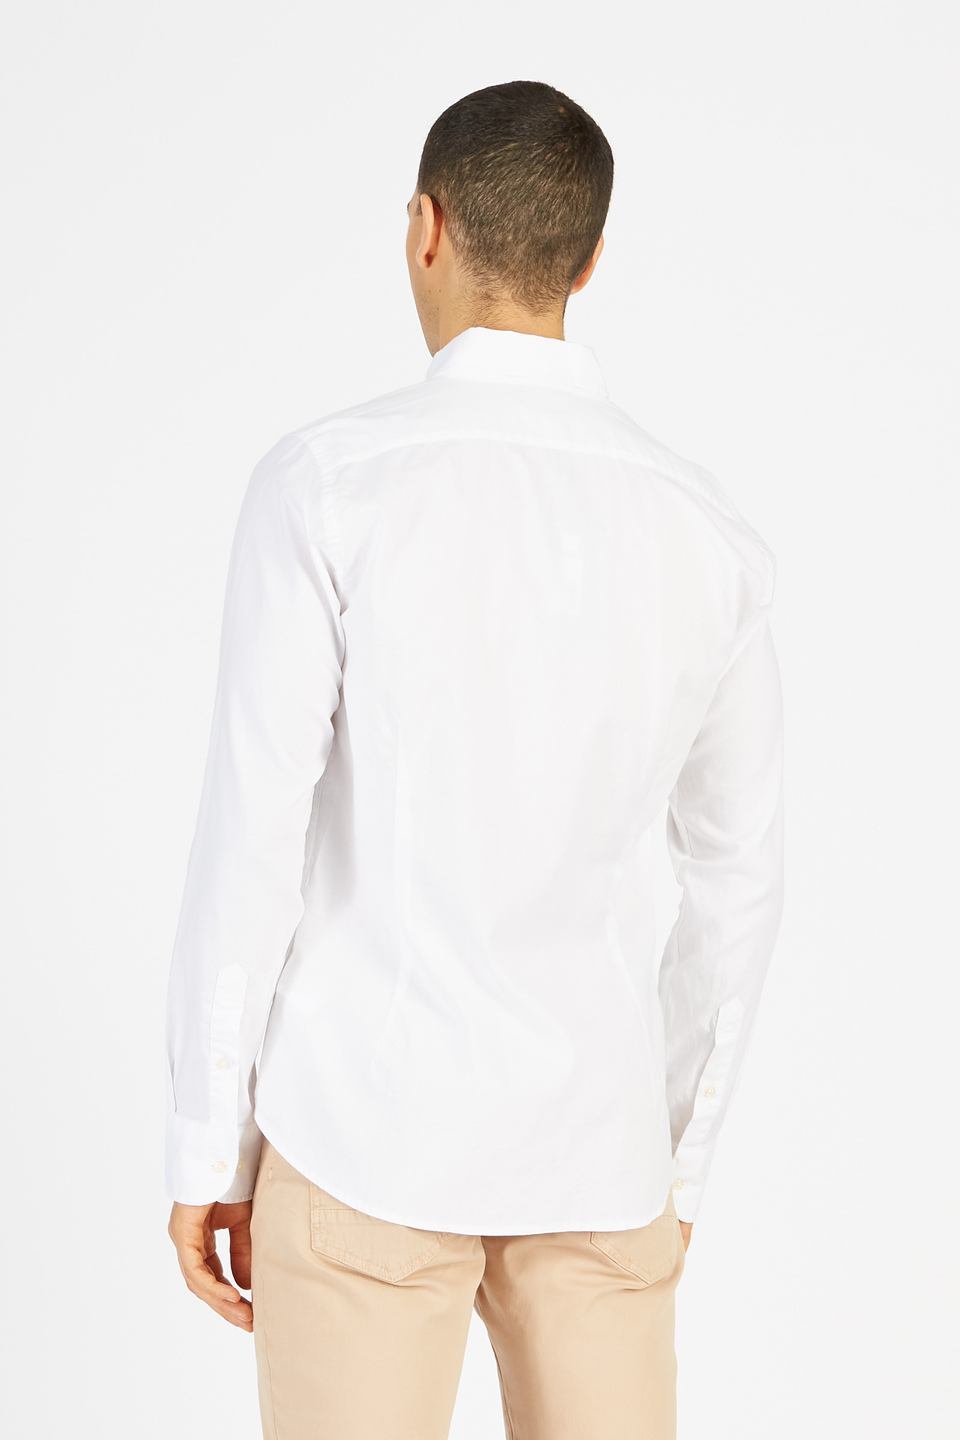 Men's shirt in a slim fit - Leon | La Martina - Official Online Shop